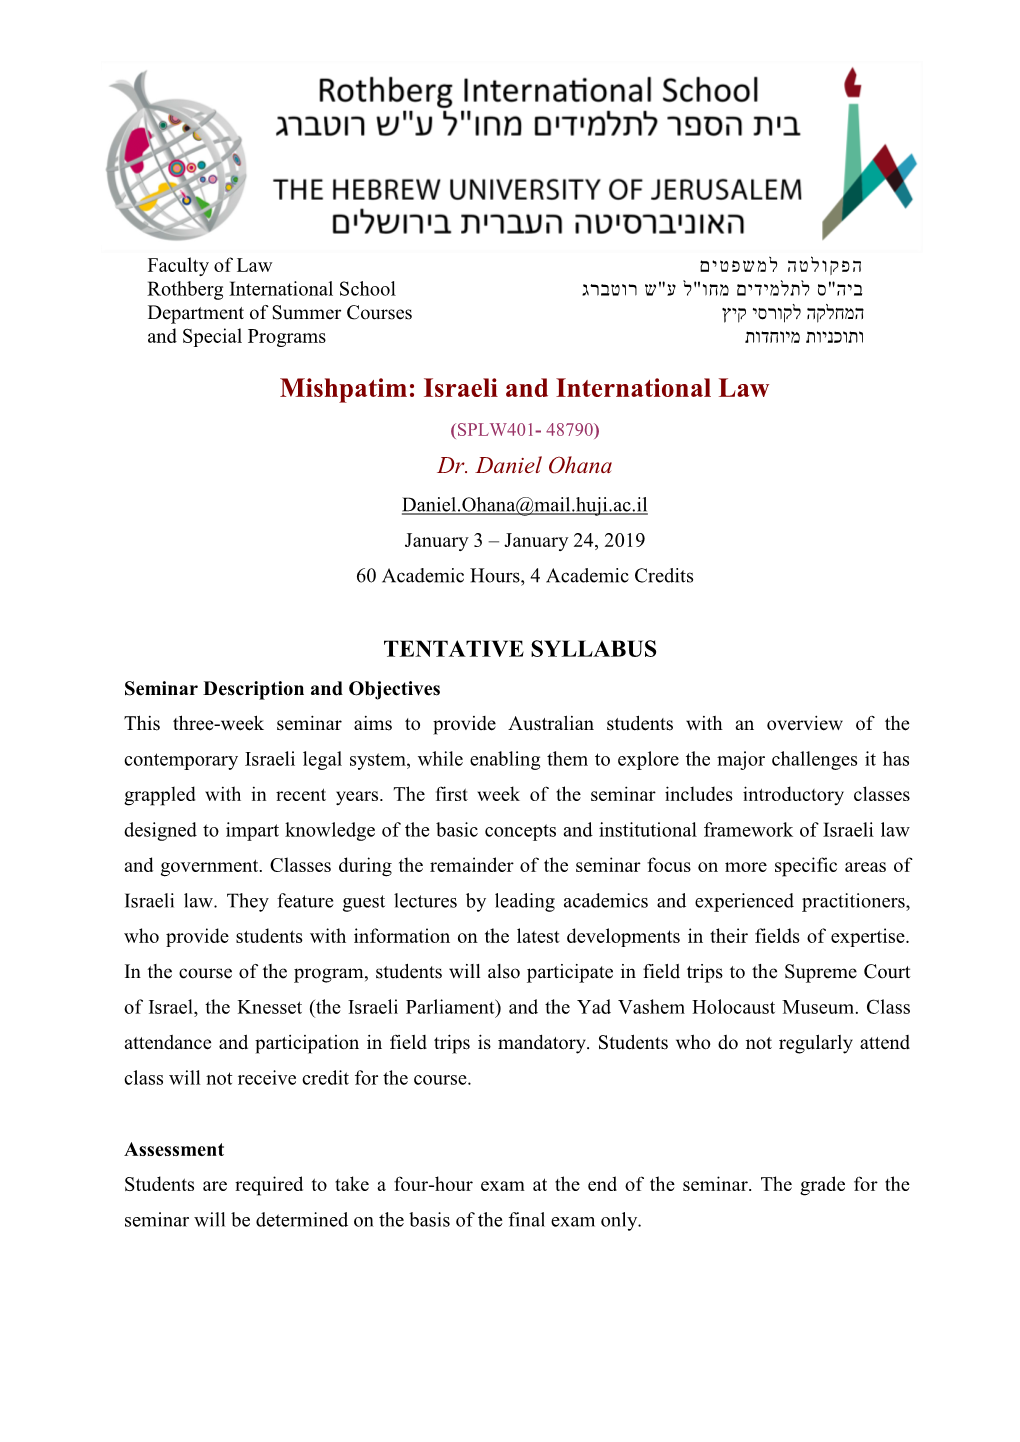 Mishpatim: Israeli and International Law (SPLW401- 48790) Dr